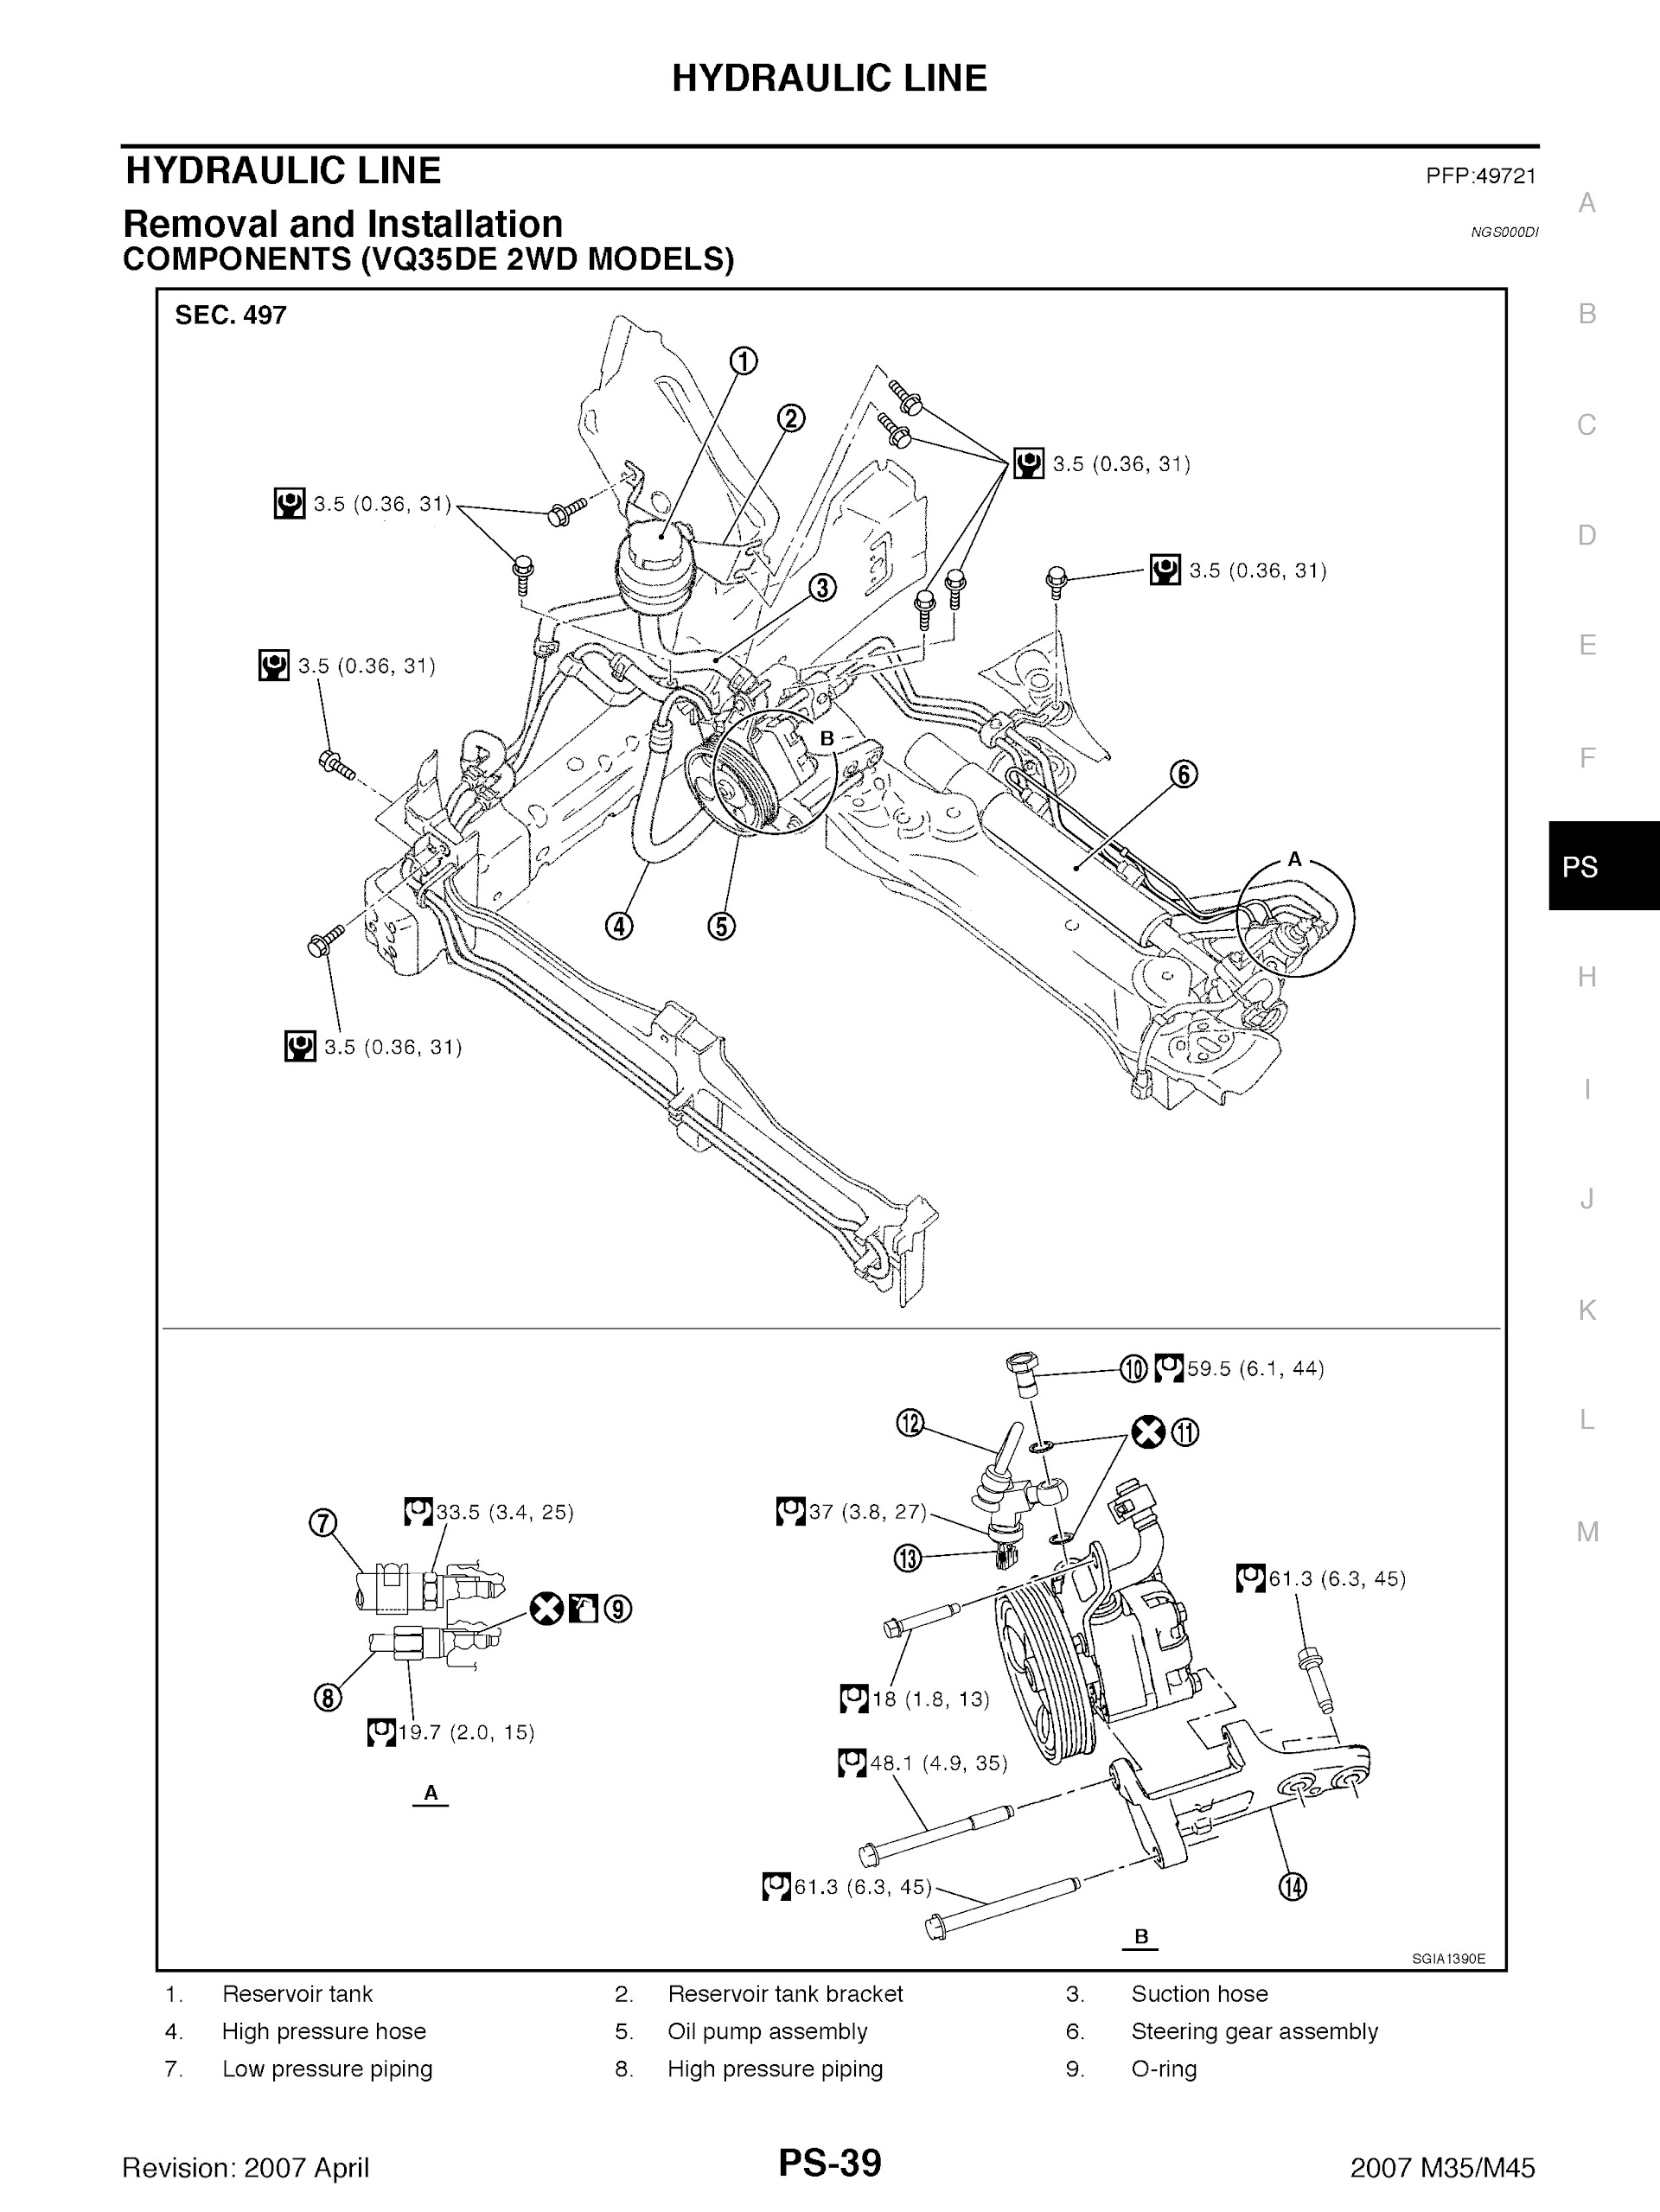 2003-2007 Infiniti M45-M35 Repair Manual, hydraulic line